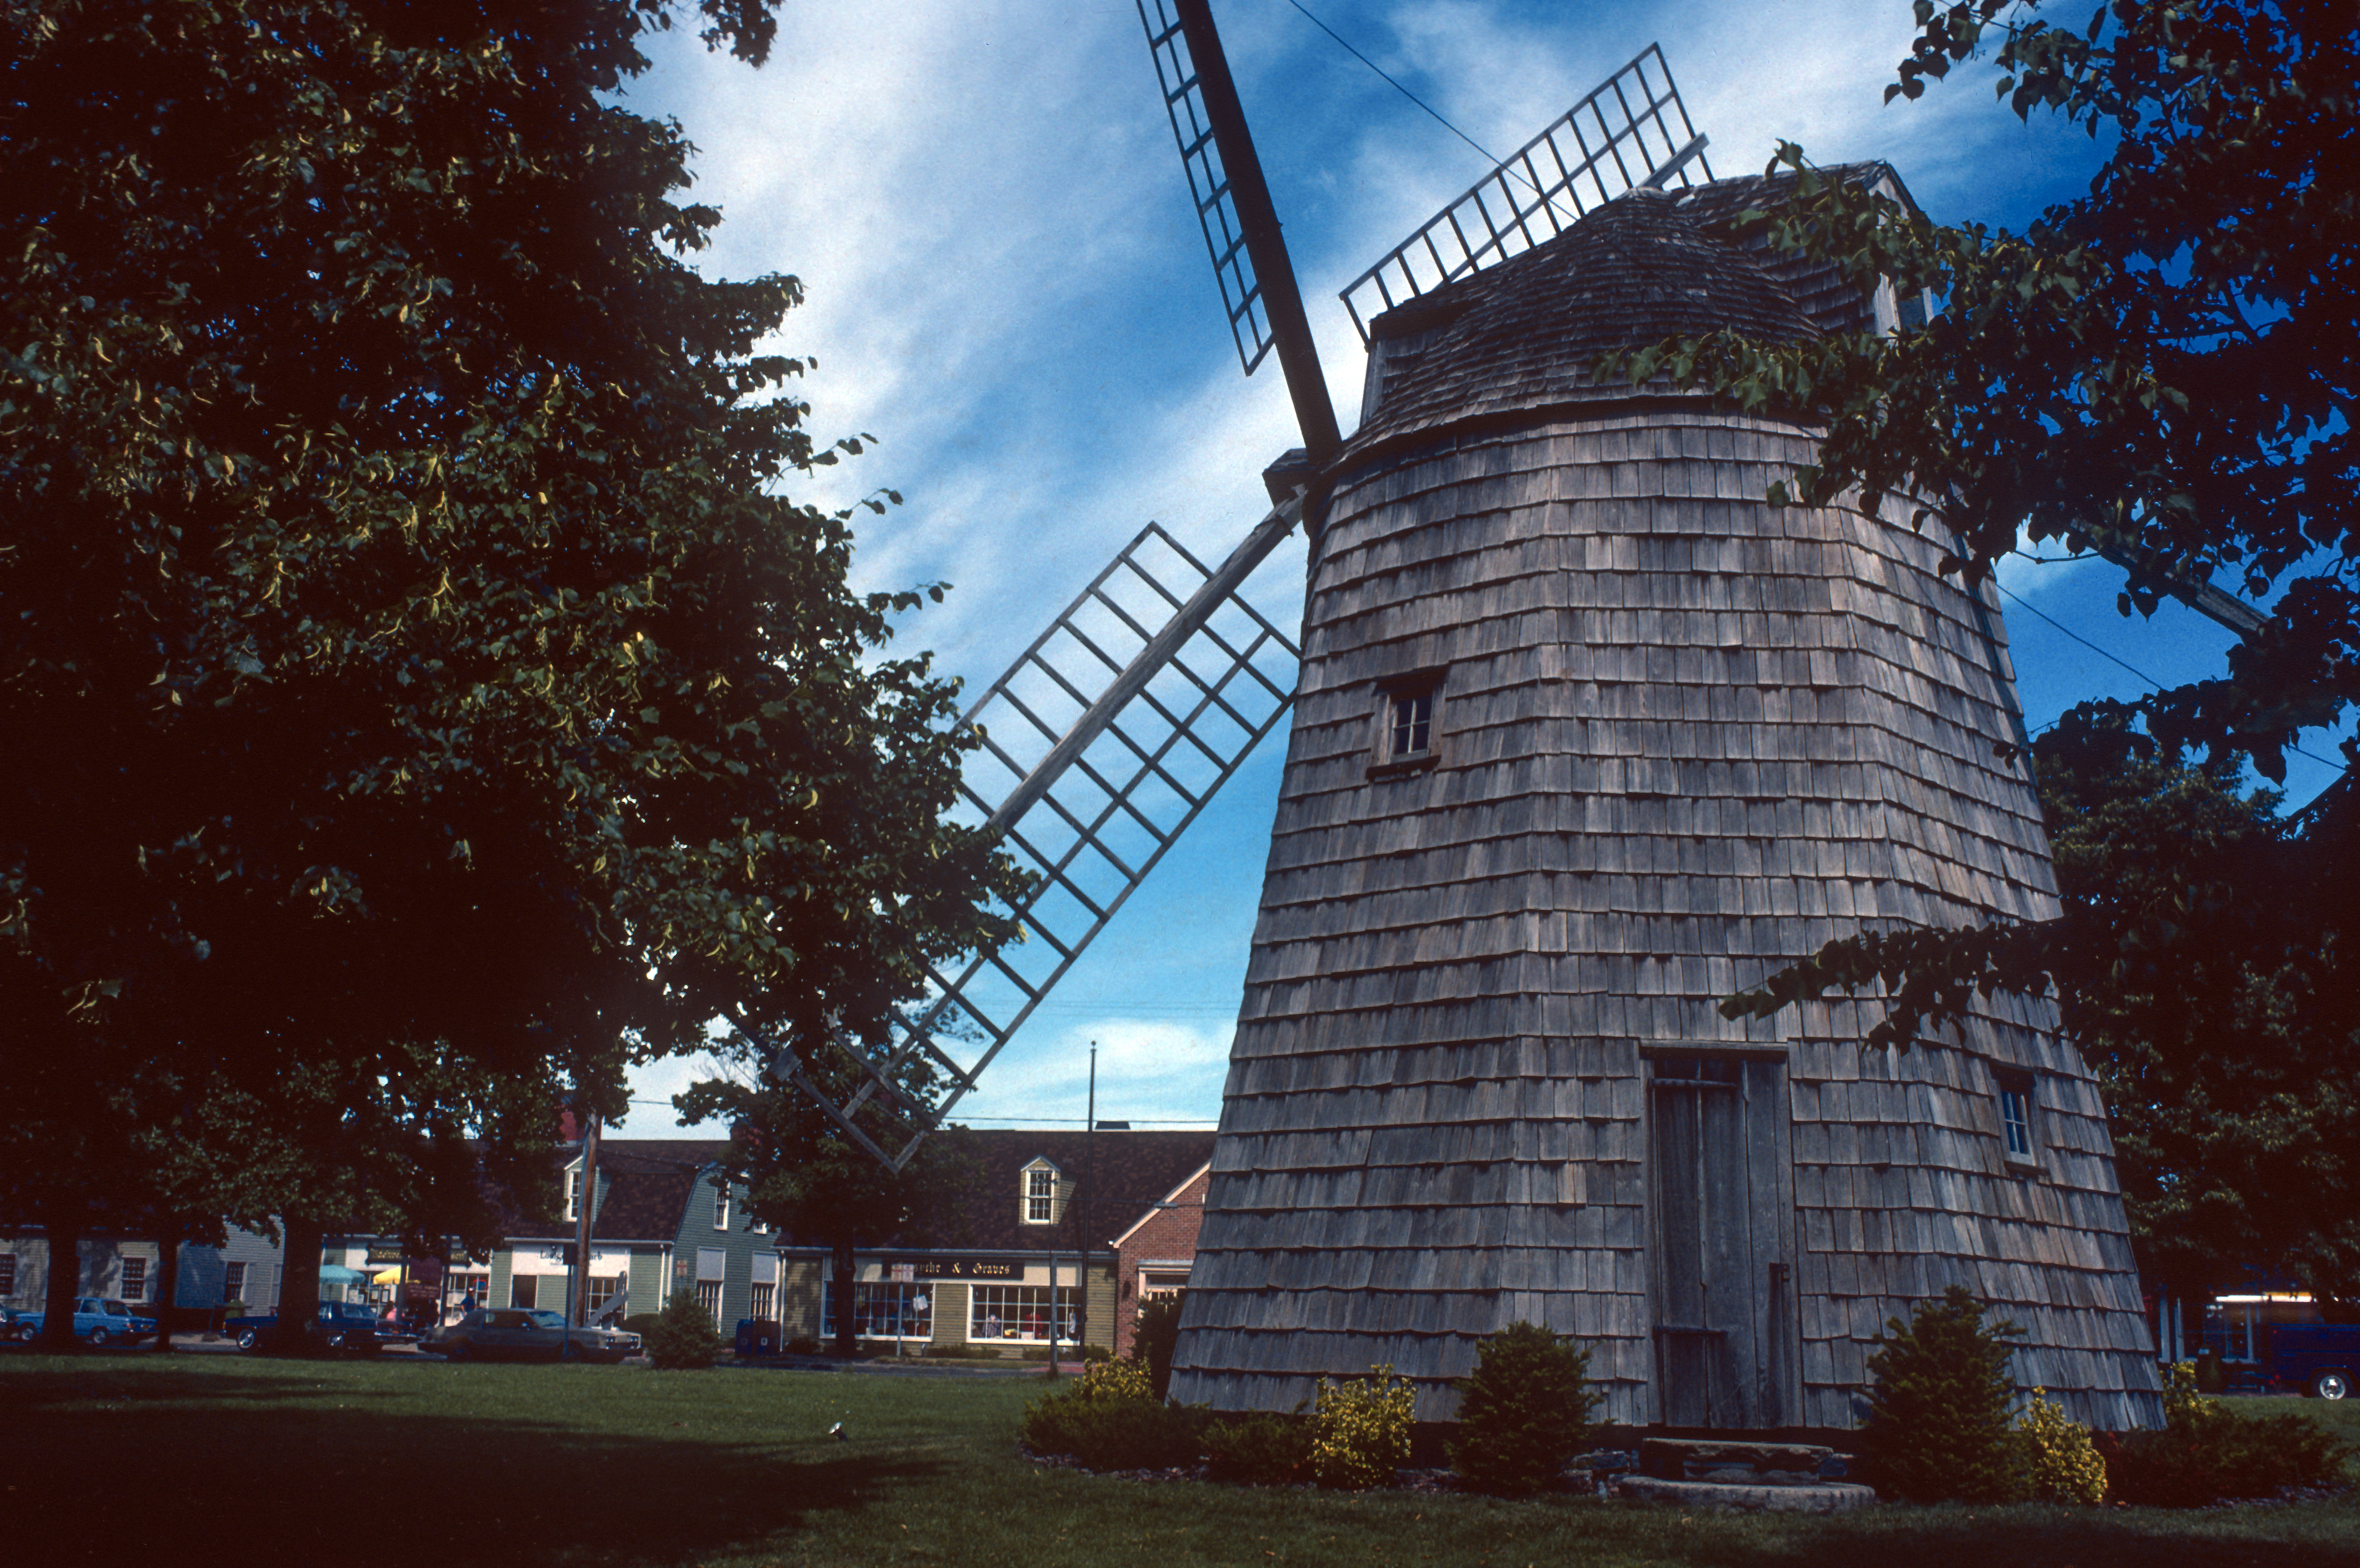 A windmill on Long Island.